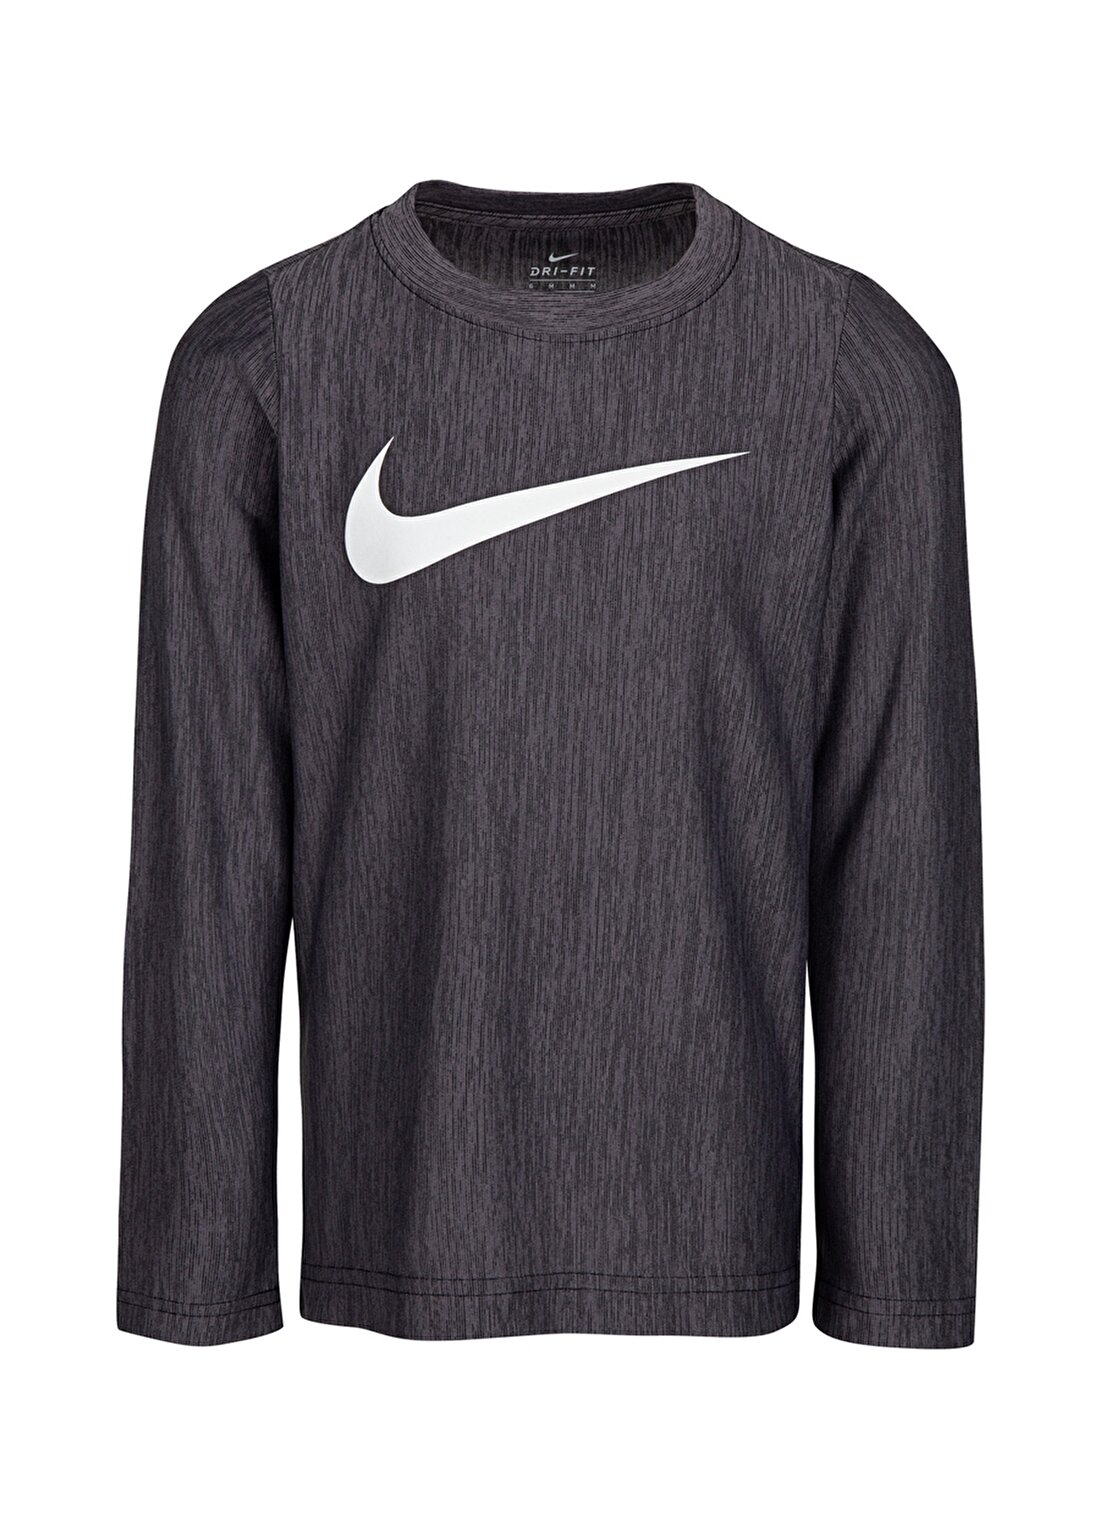 Nike 86F222 Dry Sweatshirt